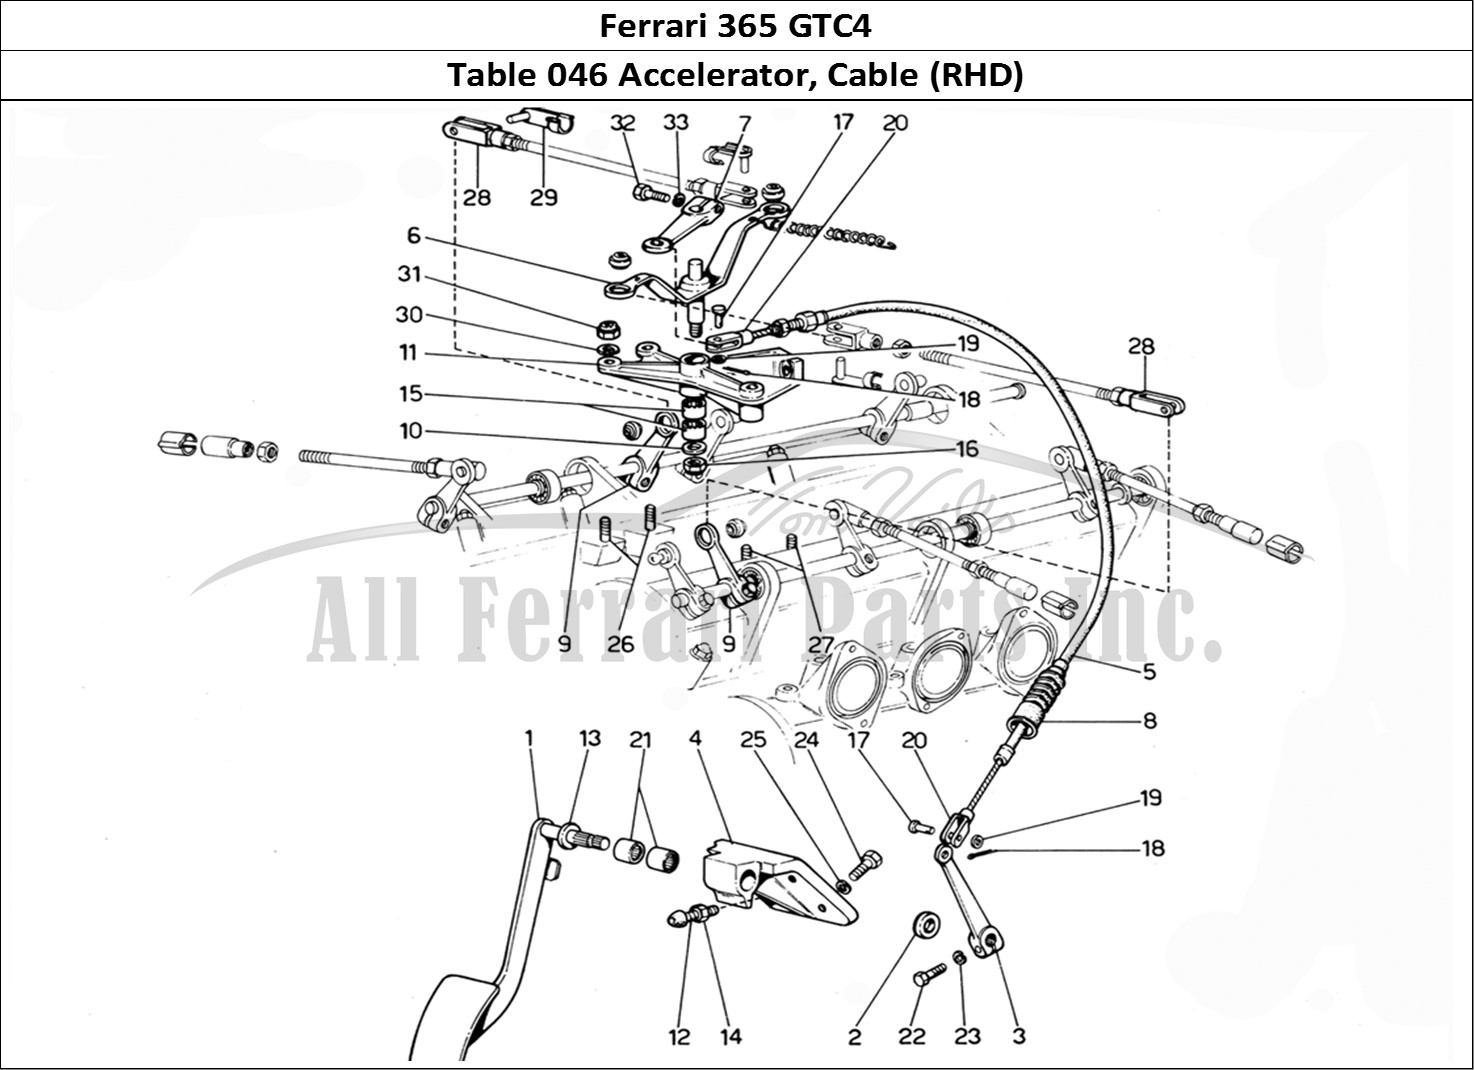 Ferrari Parts Ferrari 365 GTC4 (Mechanical) Page 046 Accelerator & Cable (RHD)